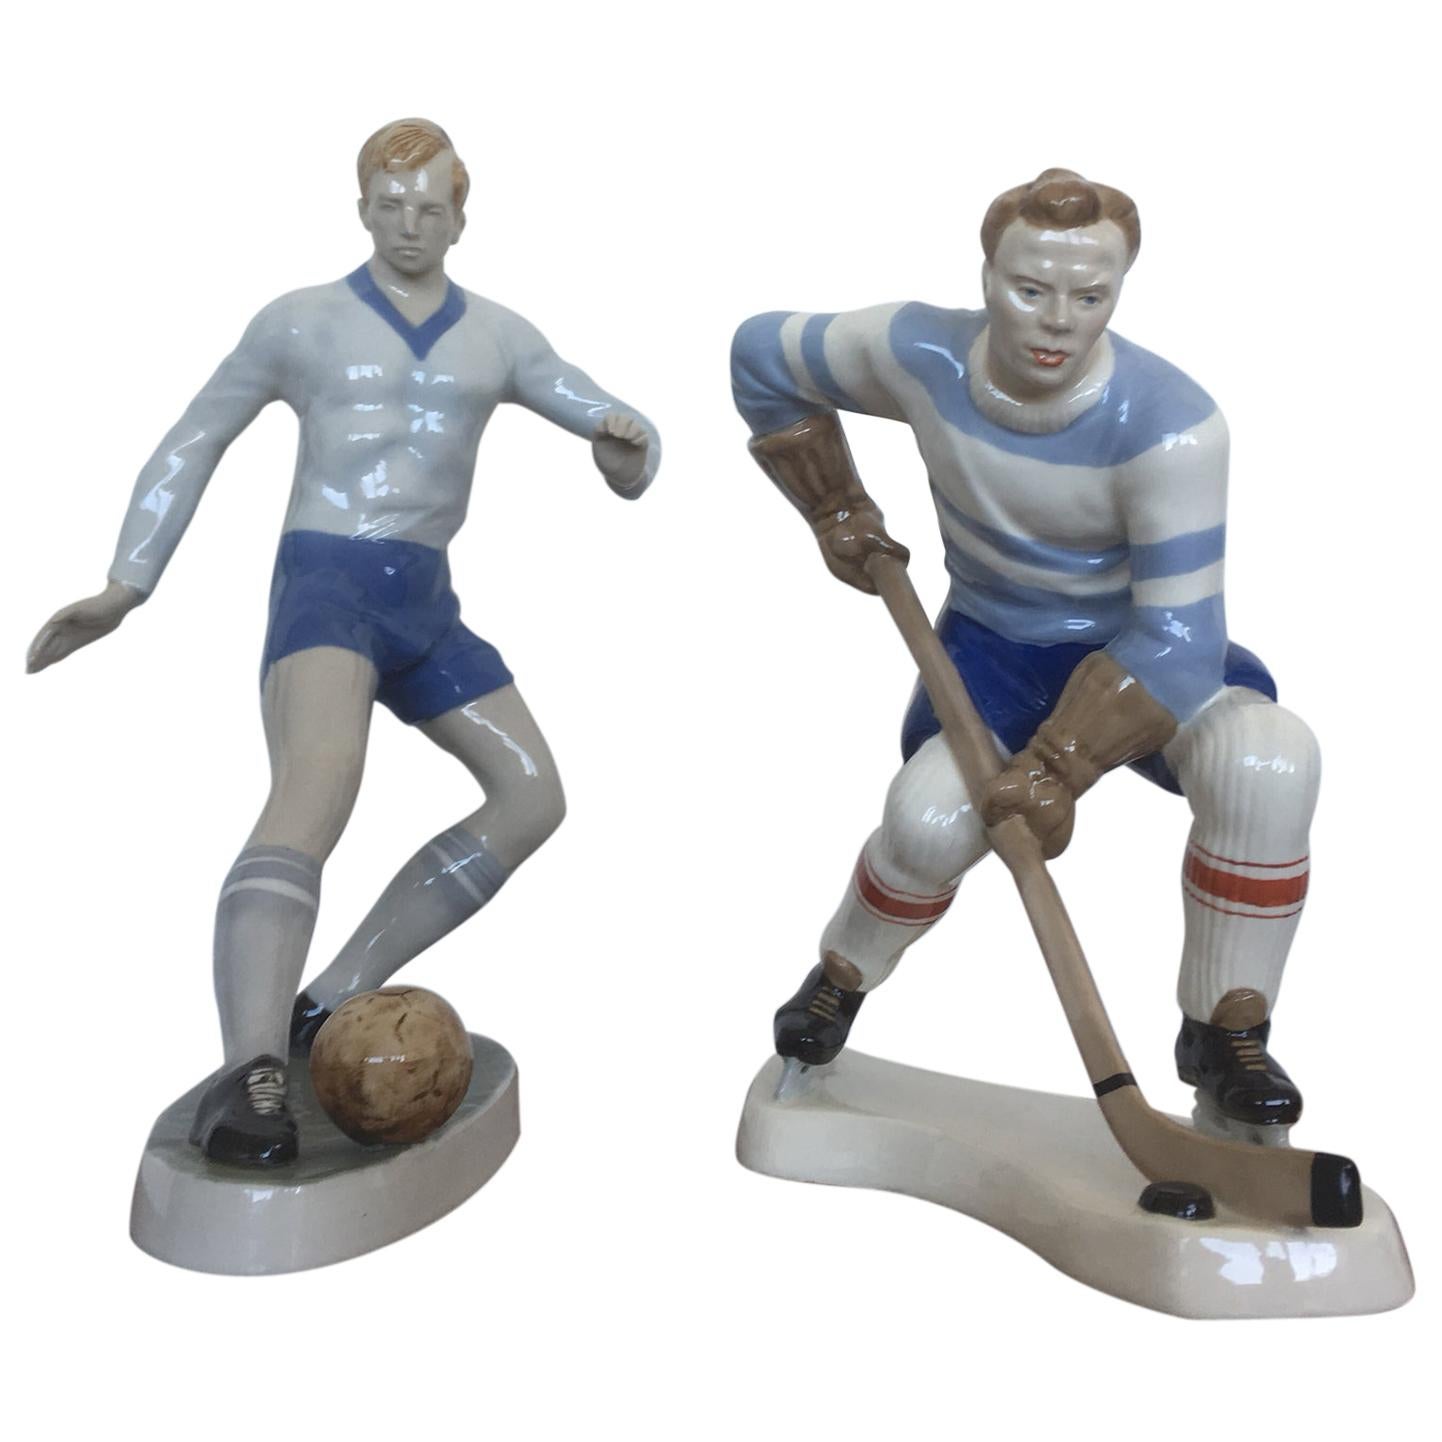 Rare Beautiful Design Porcelain Figurines, Football and Hockey Player, 1940s